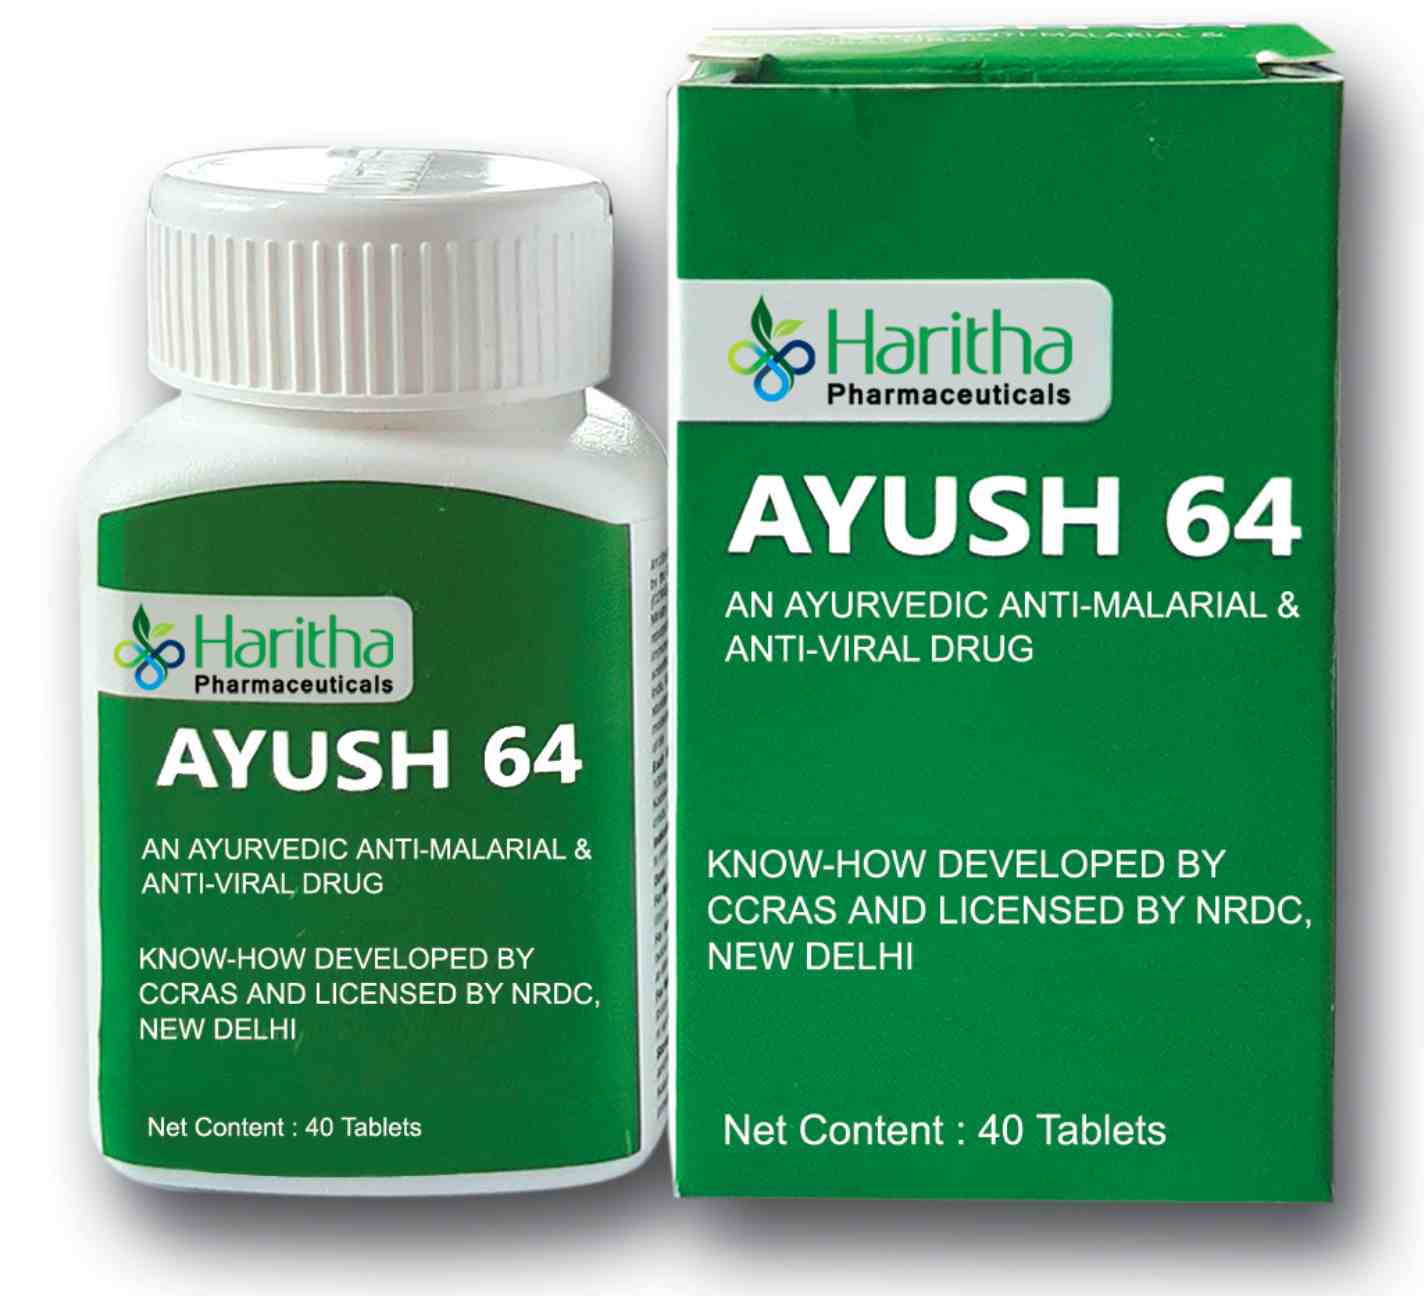 ayush64-CCRAS-Haritha-compressed